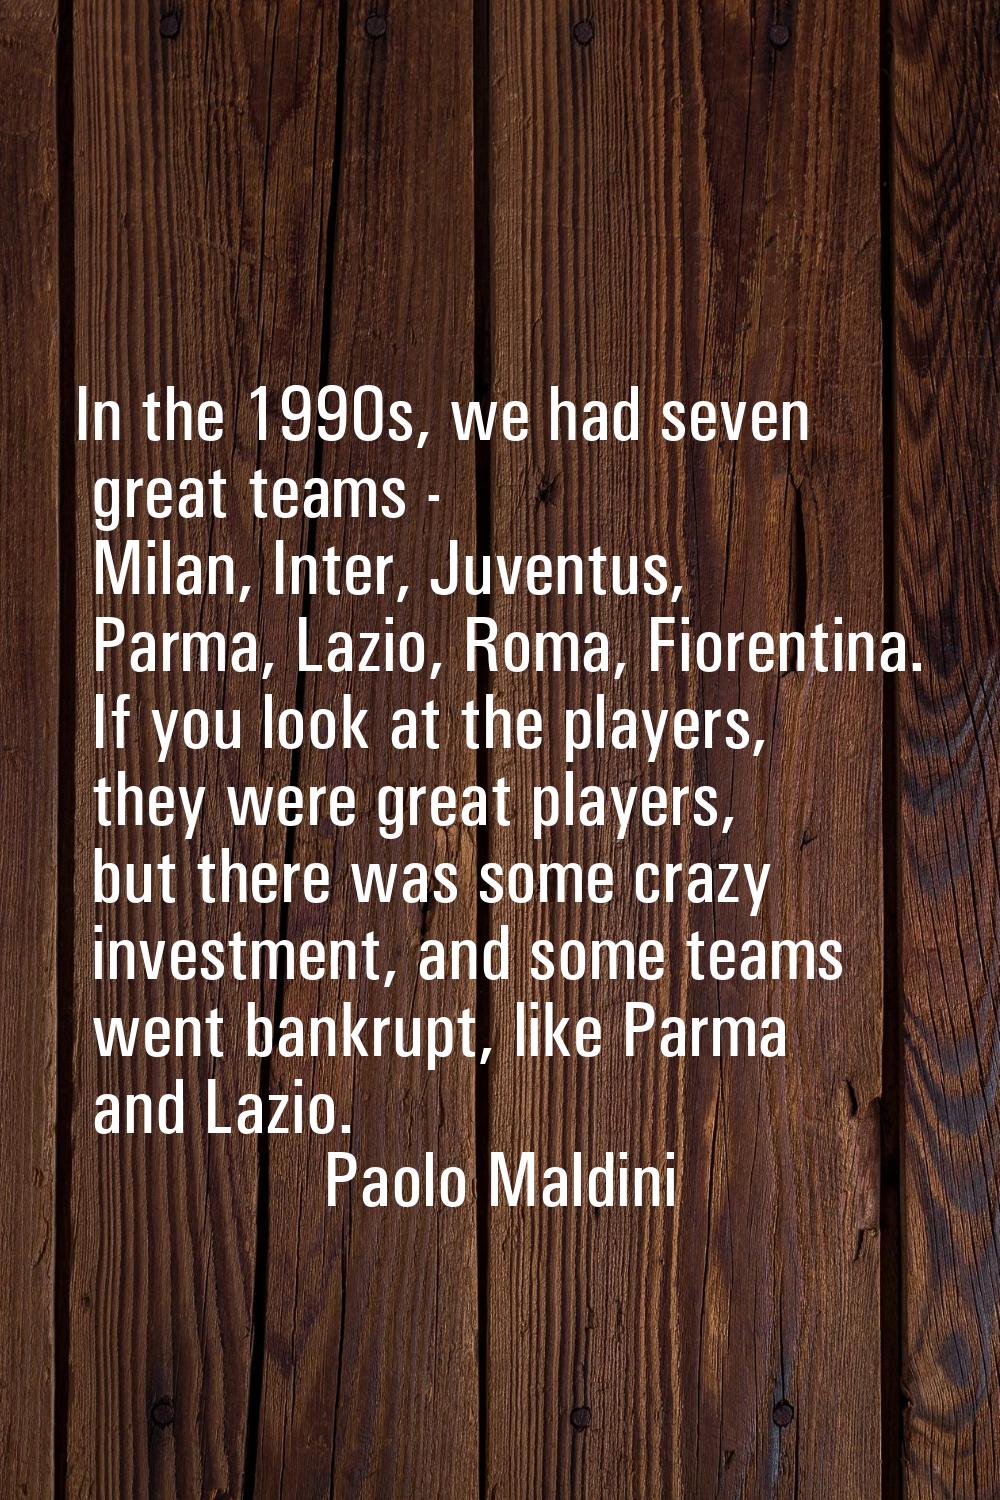 In the 1990s, we had seven great teams - Milan, Inter, Juventus, Parma, Lazio, Roma, Fiorentina. If